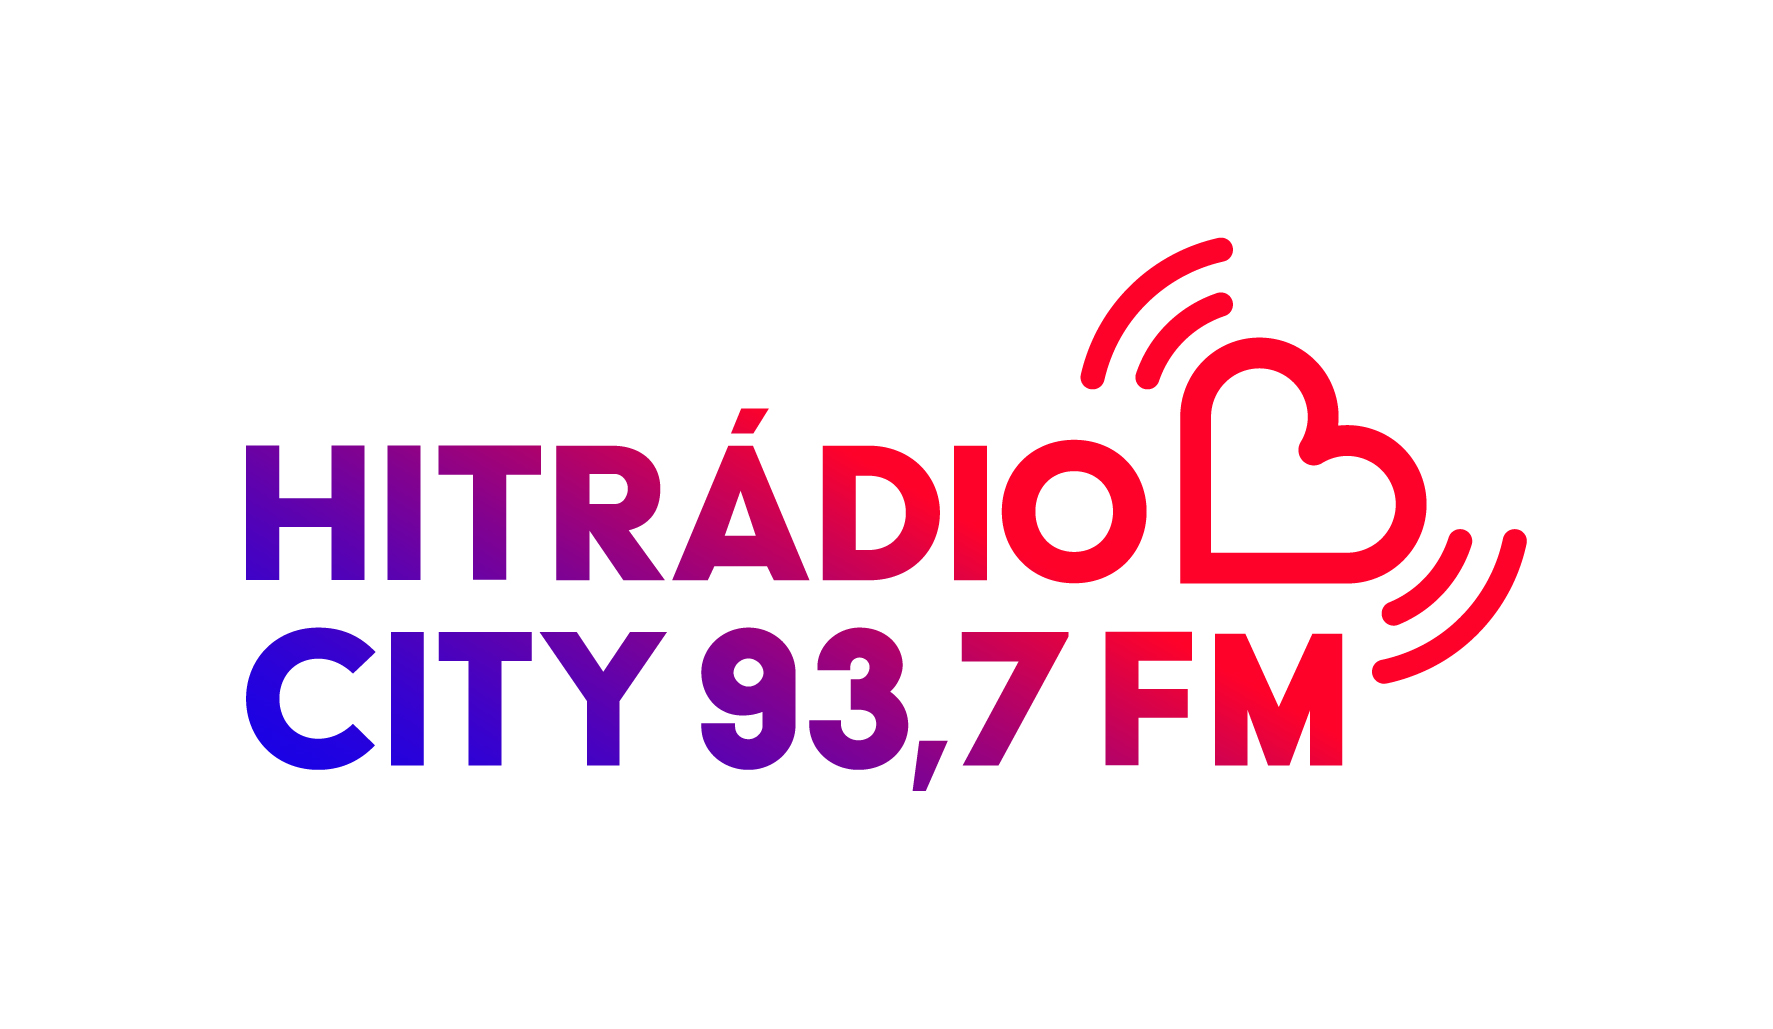 logo-hitradio-city-937fm-inverzni_1